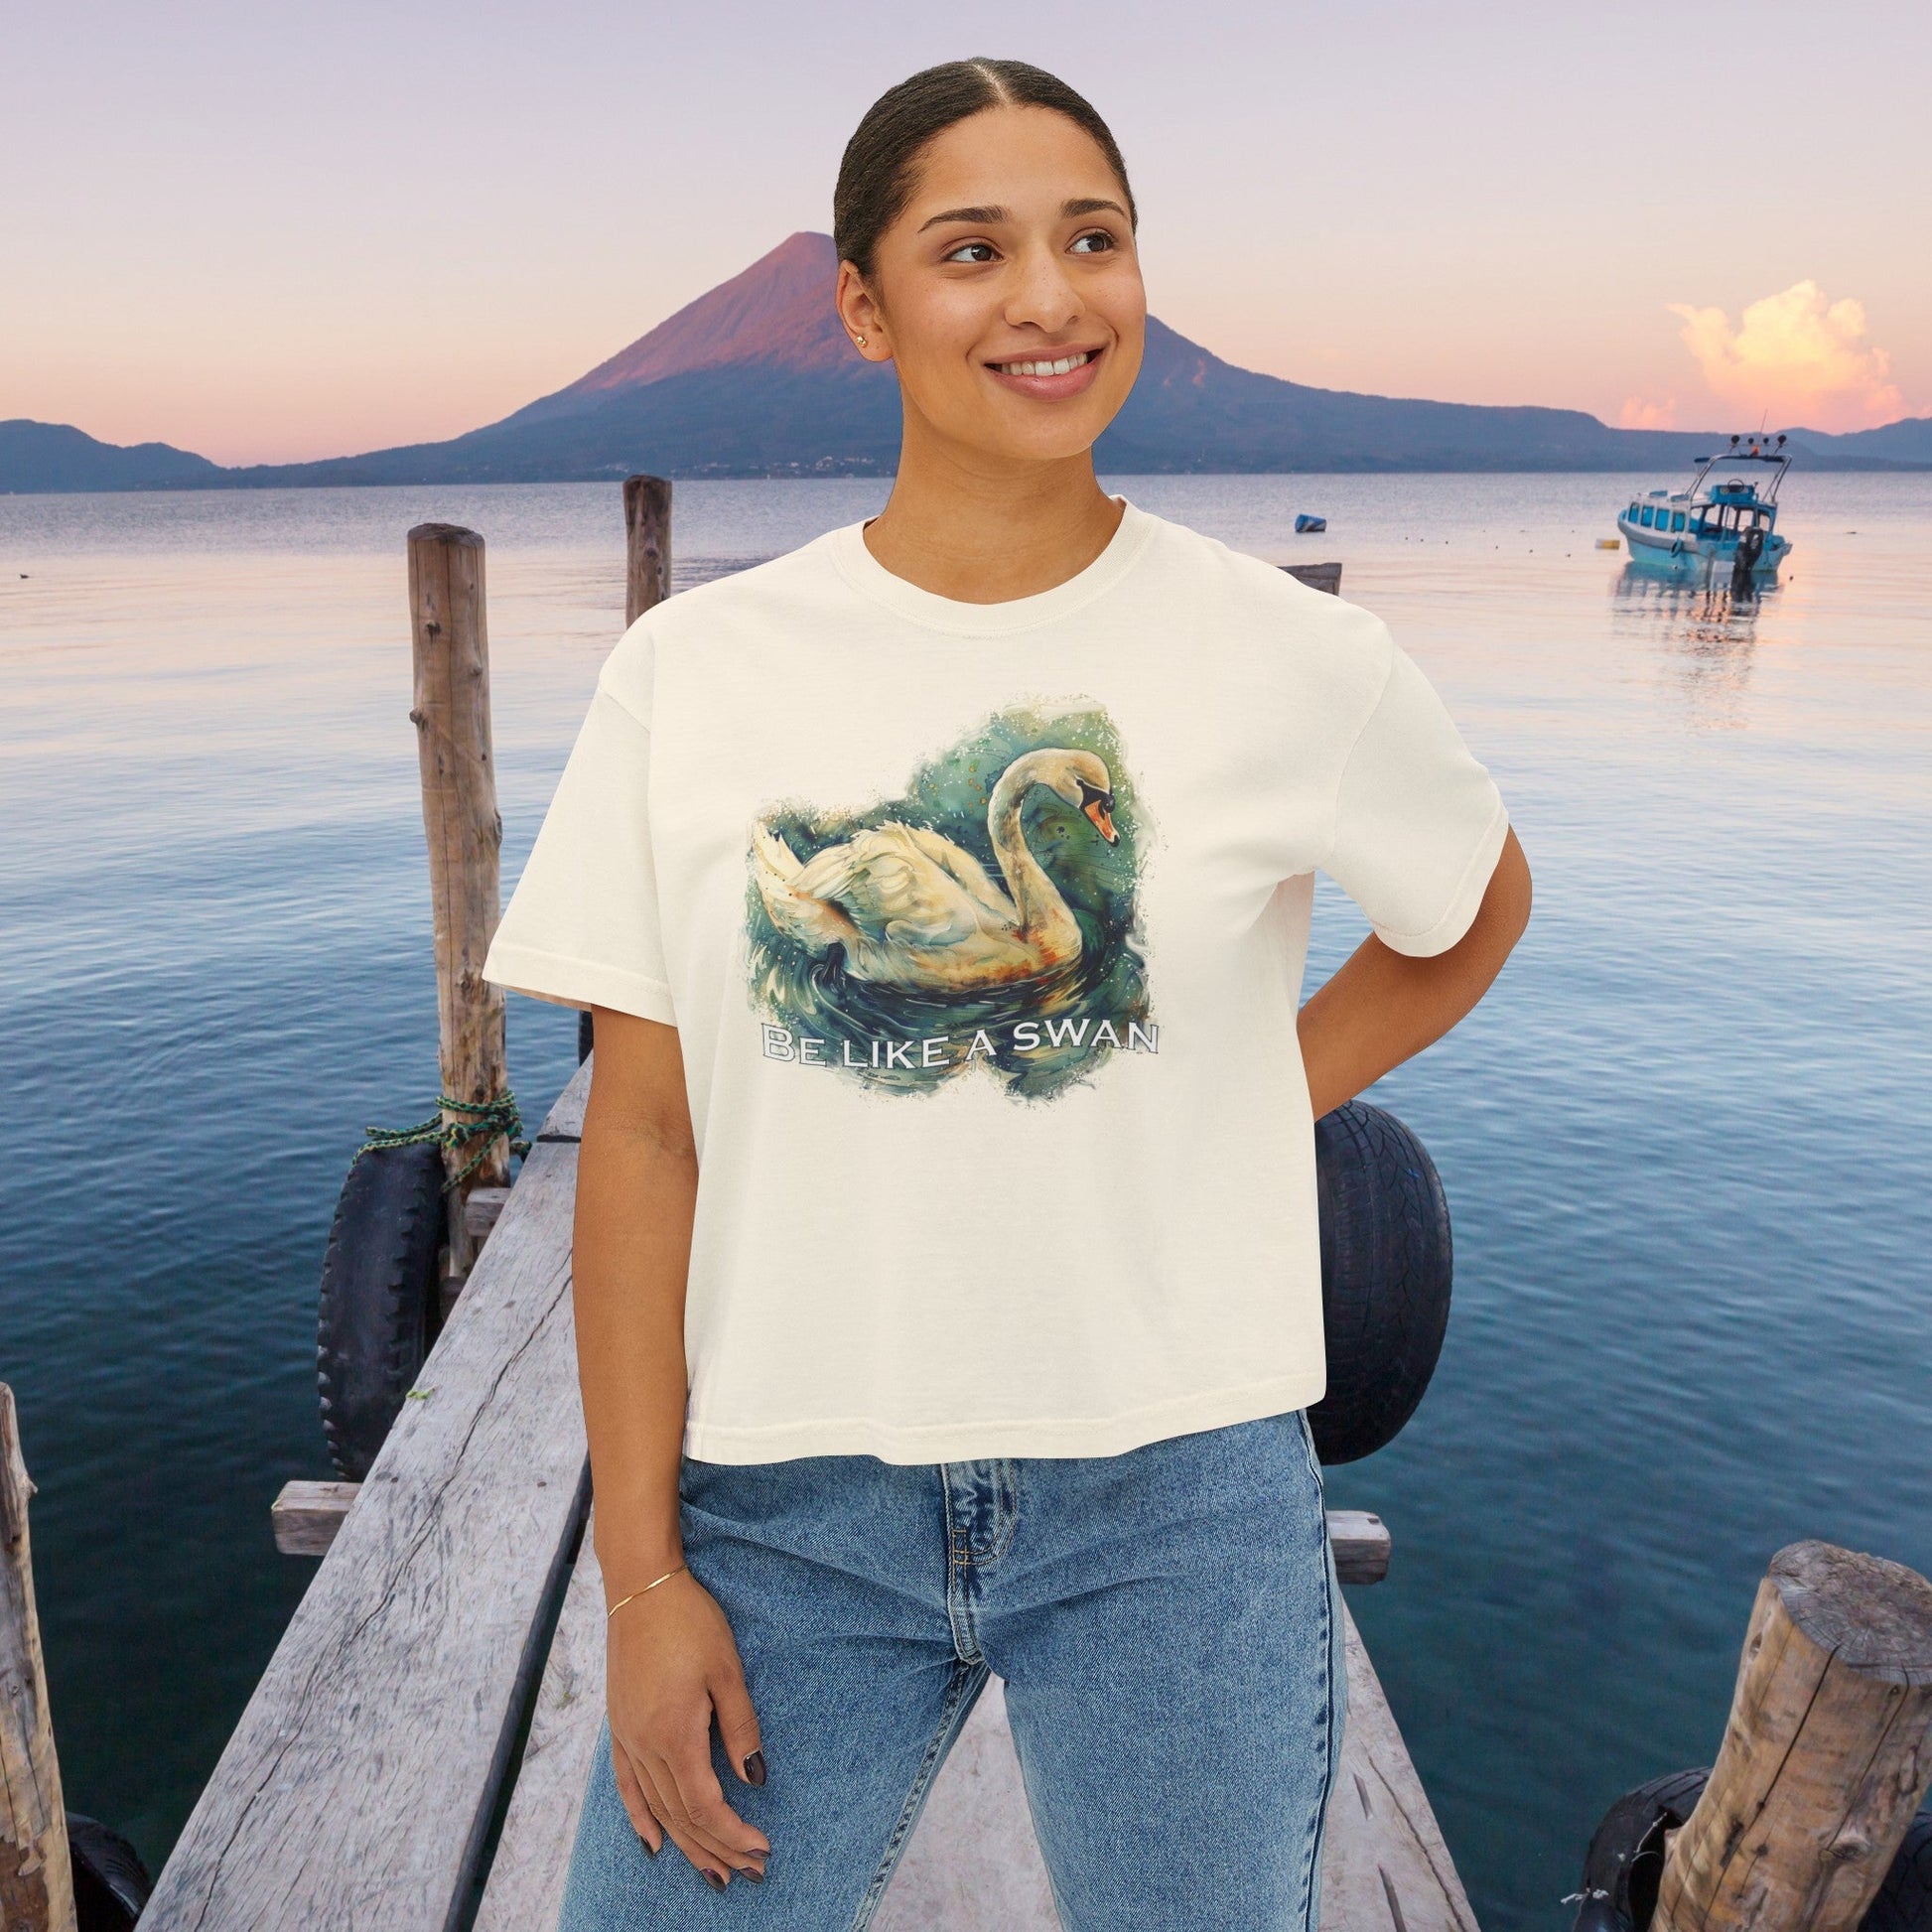 Swan Art Crop Top T - shirt, Original Art Print Tee, Inspirational "Be like a Swan", Comfort Colors Tee - FlooredByArt